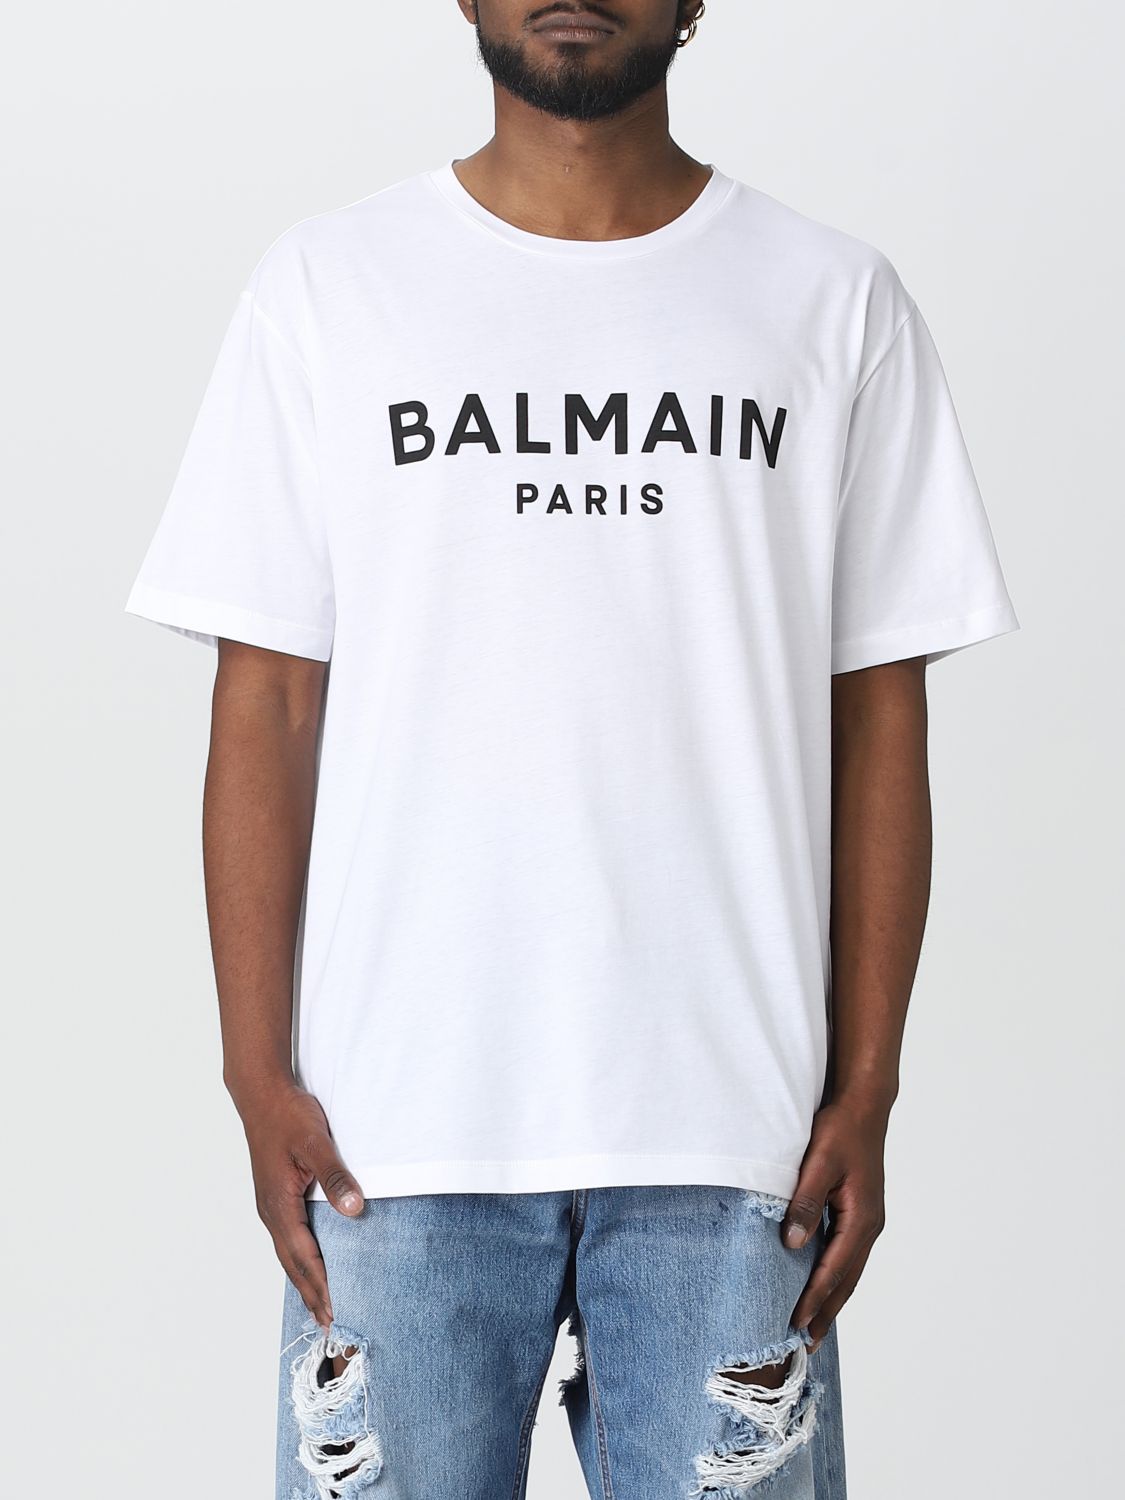 Balmain t-shirt for men